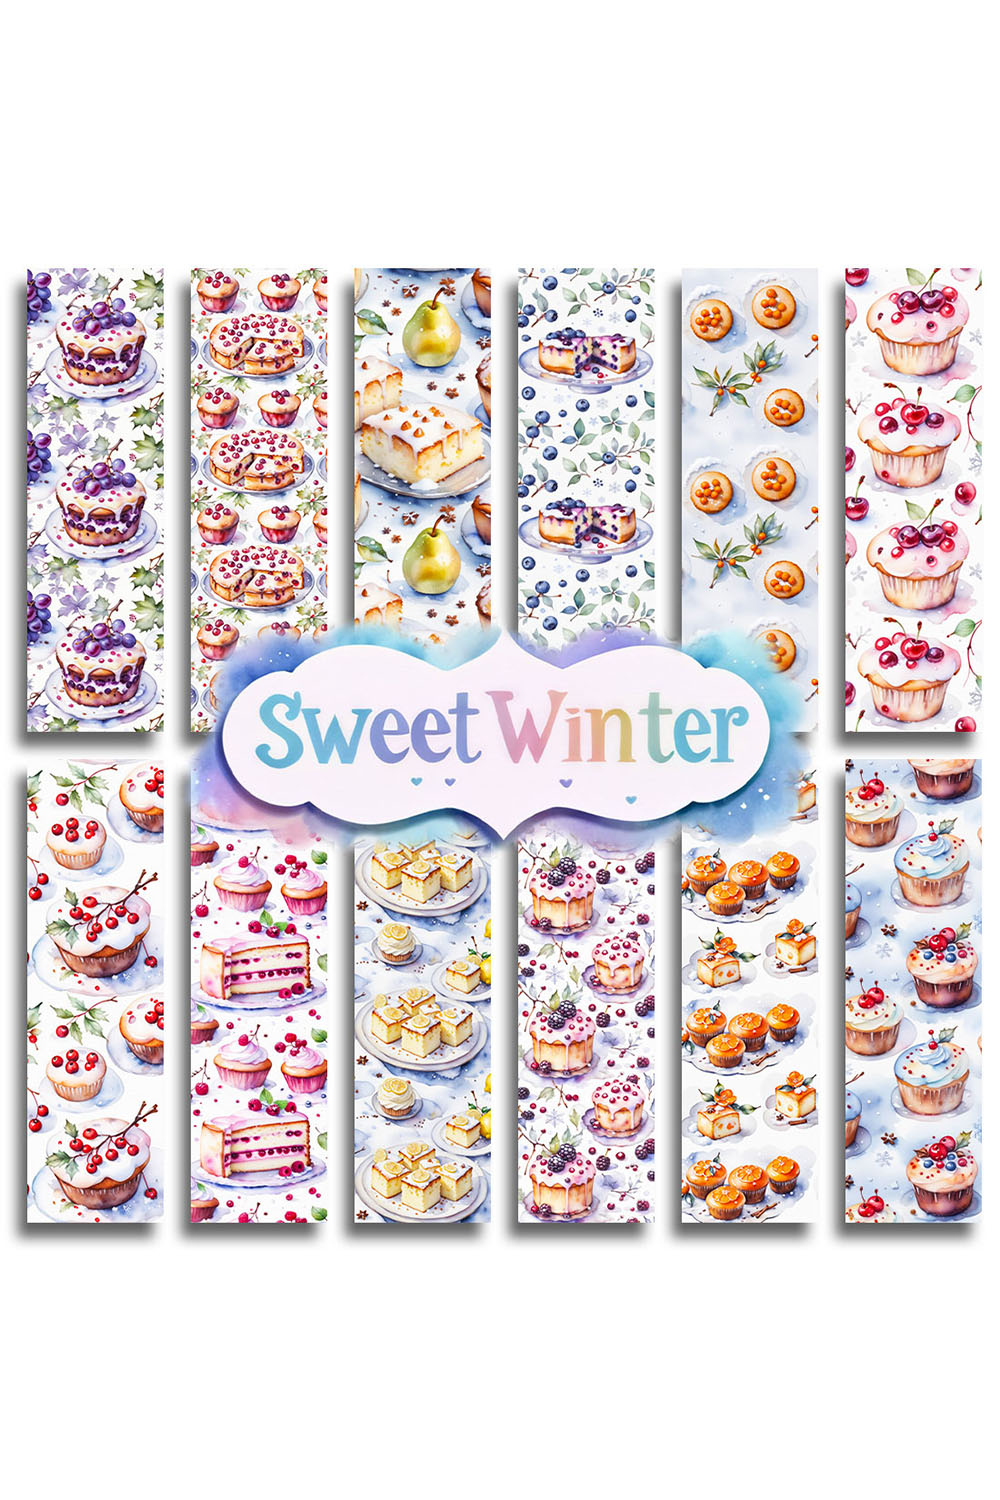 Sweet Winter: Seamless Digital Patterns pinterest preview image.